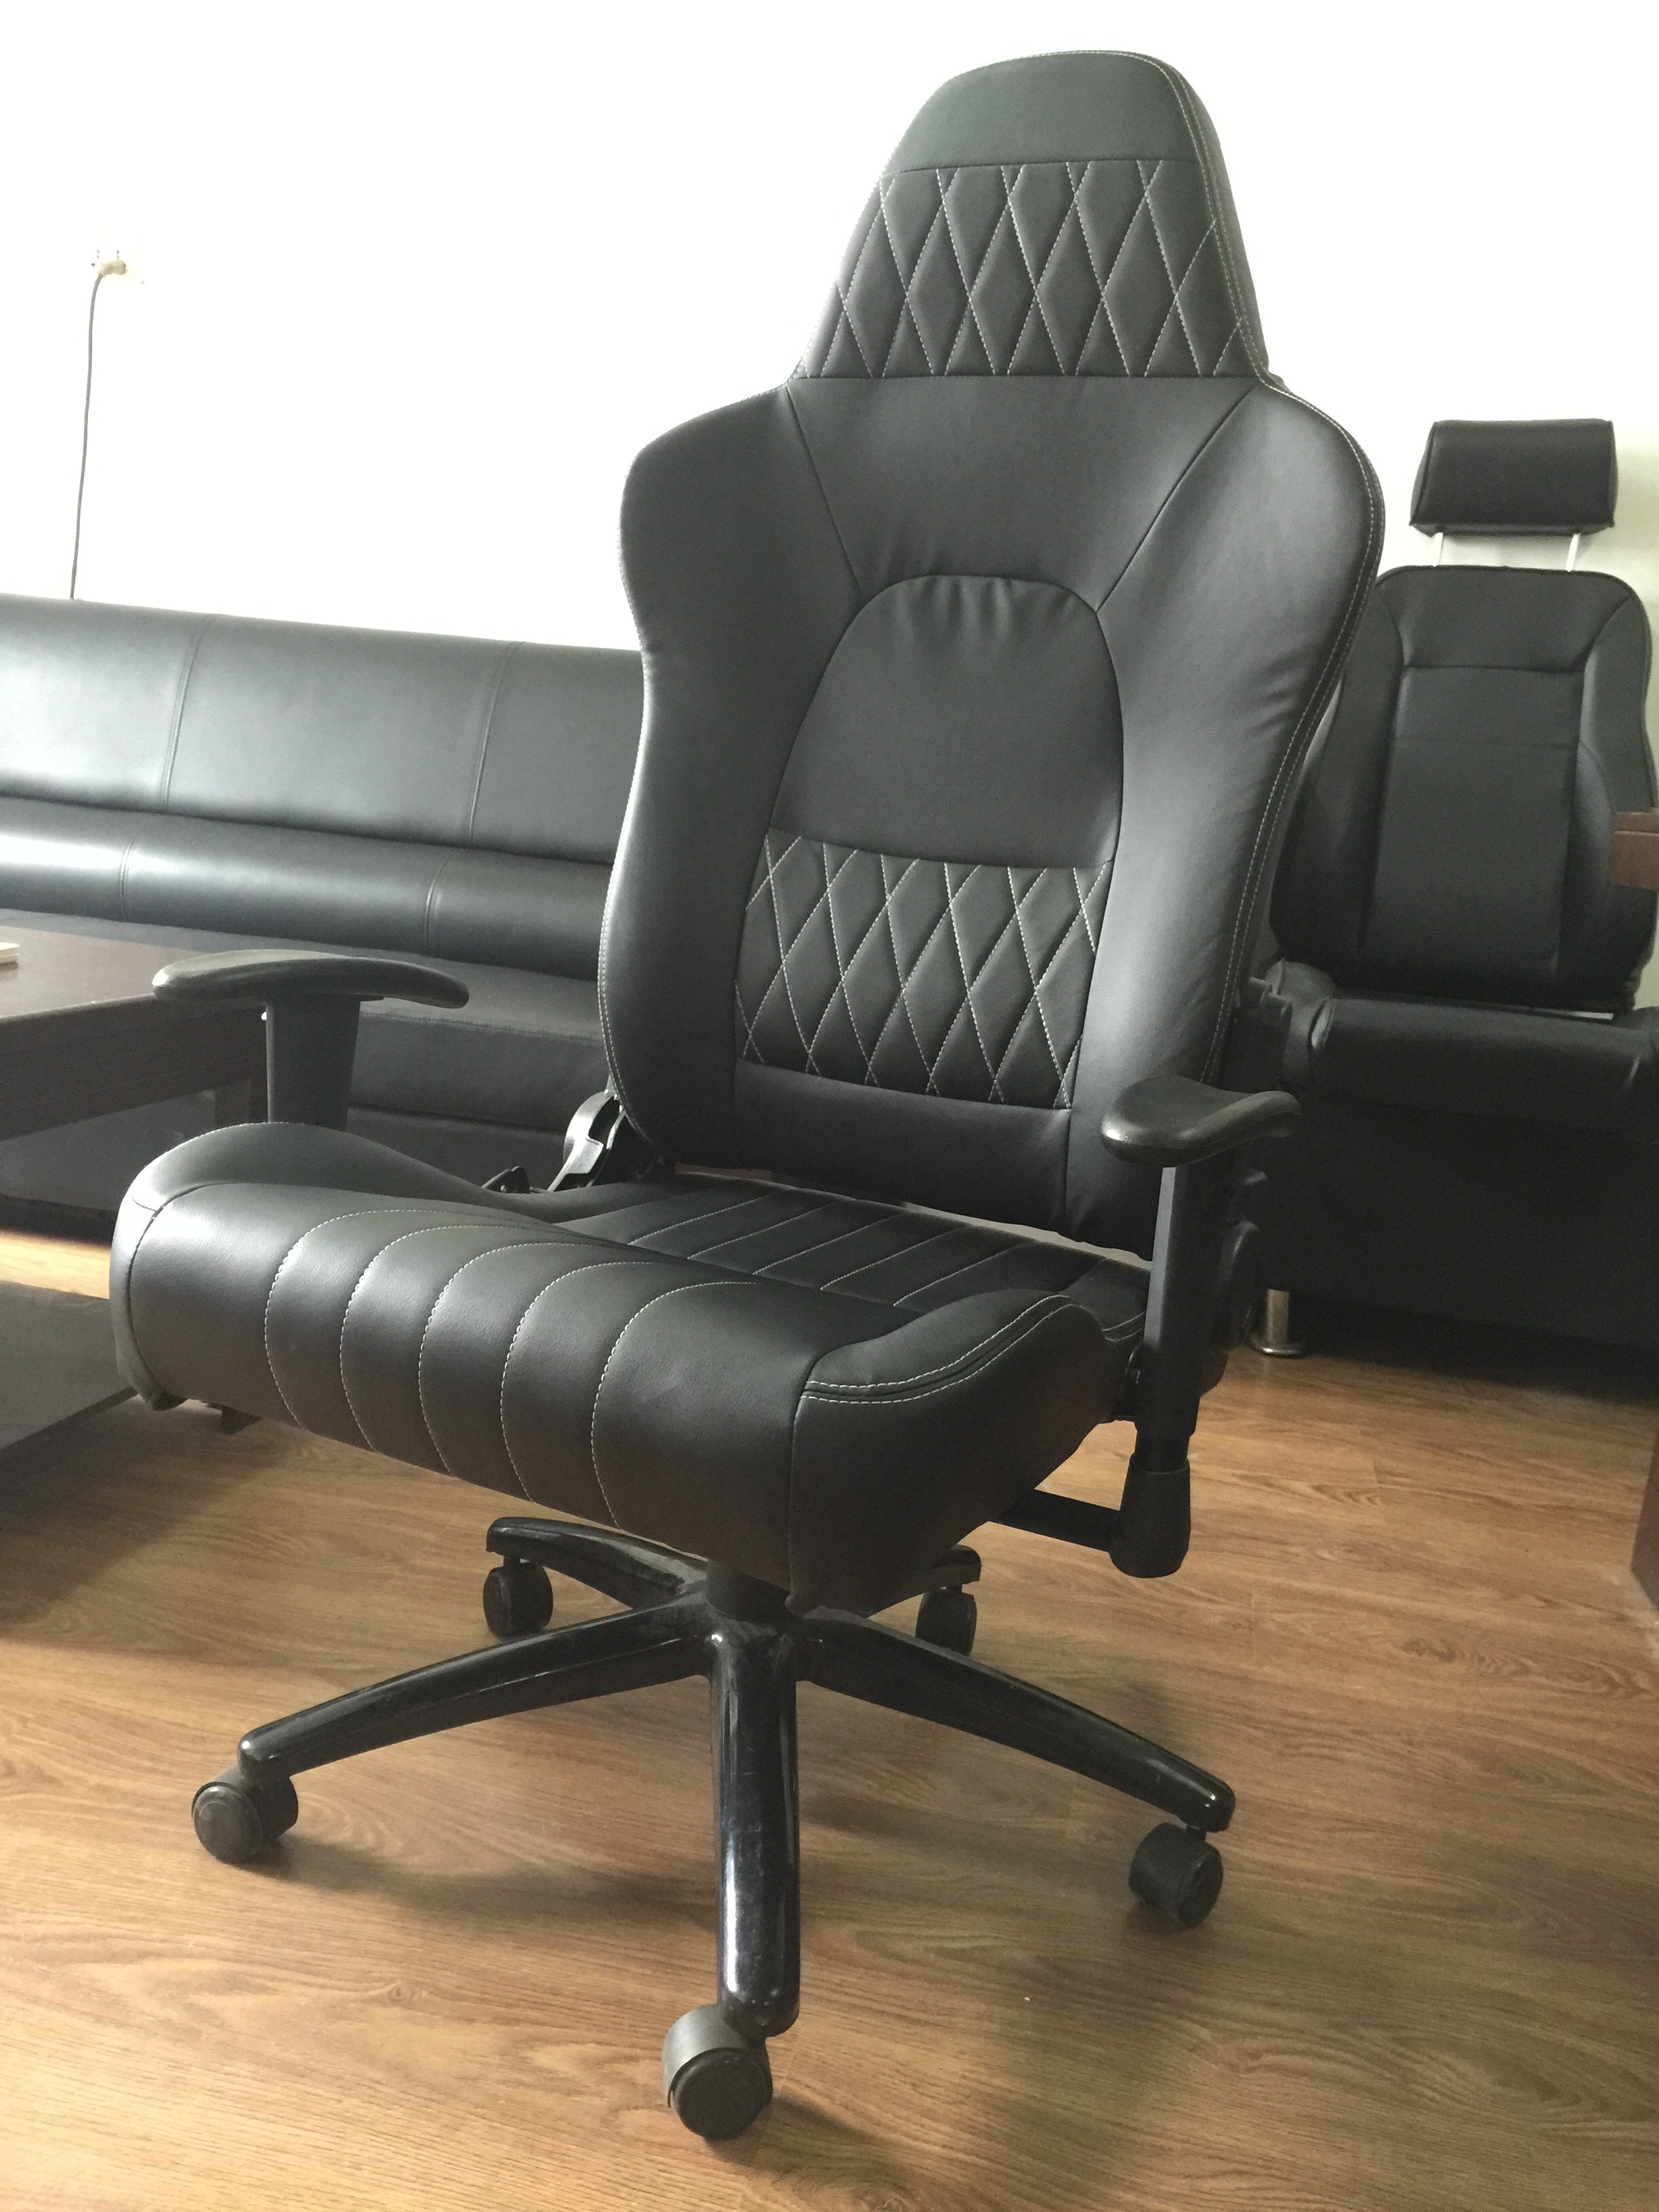 Swivel Desk Chair Without Wheels : Ergonomic Desk Chairs Without Wheels